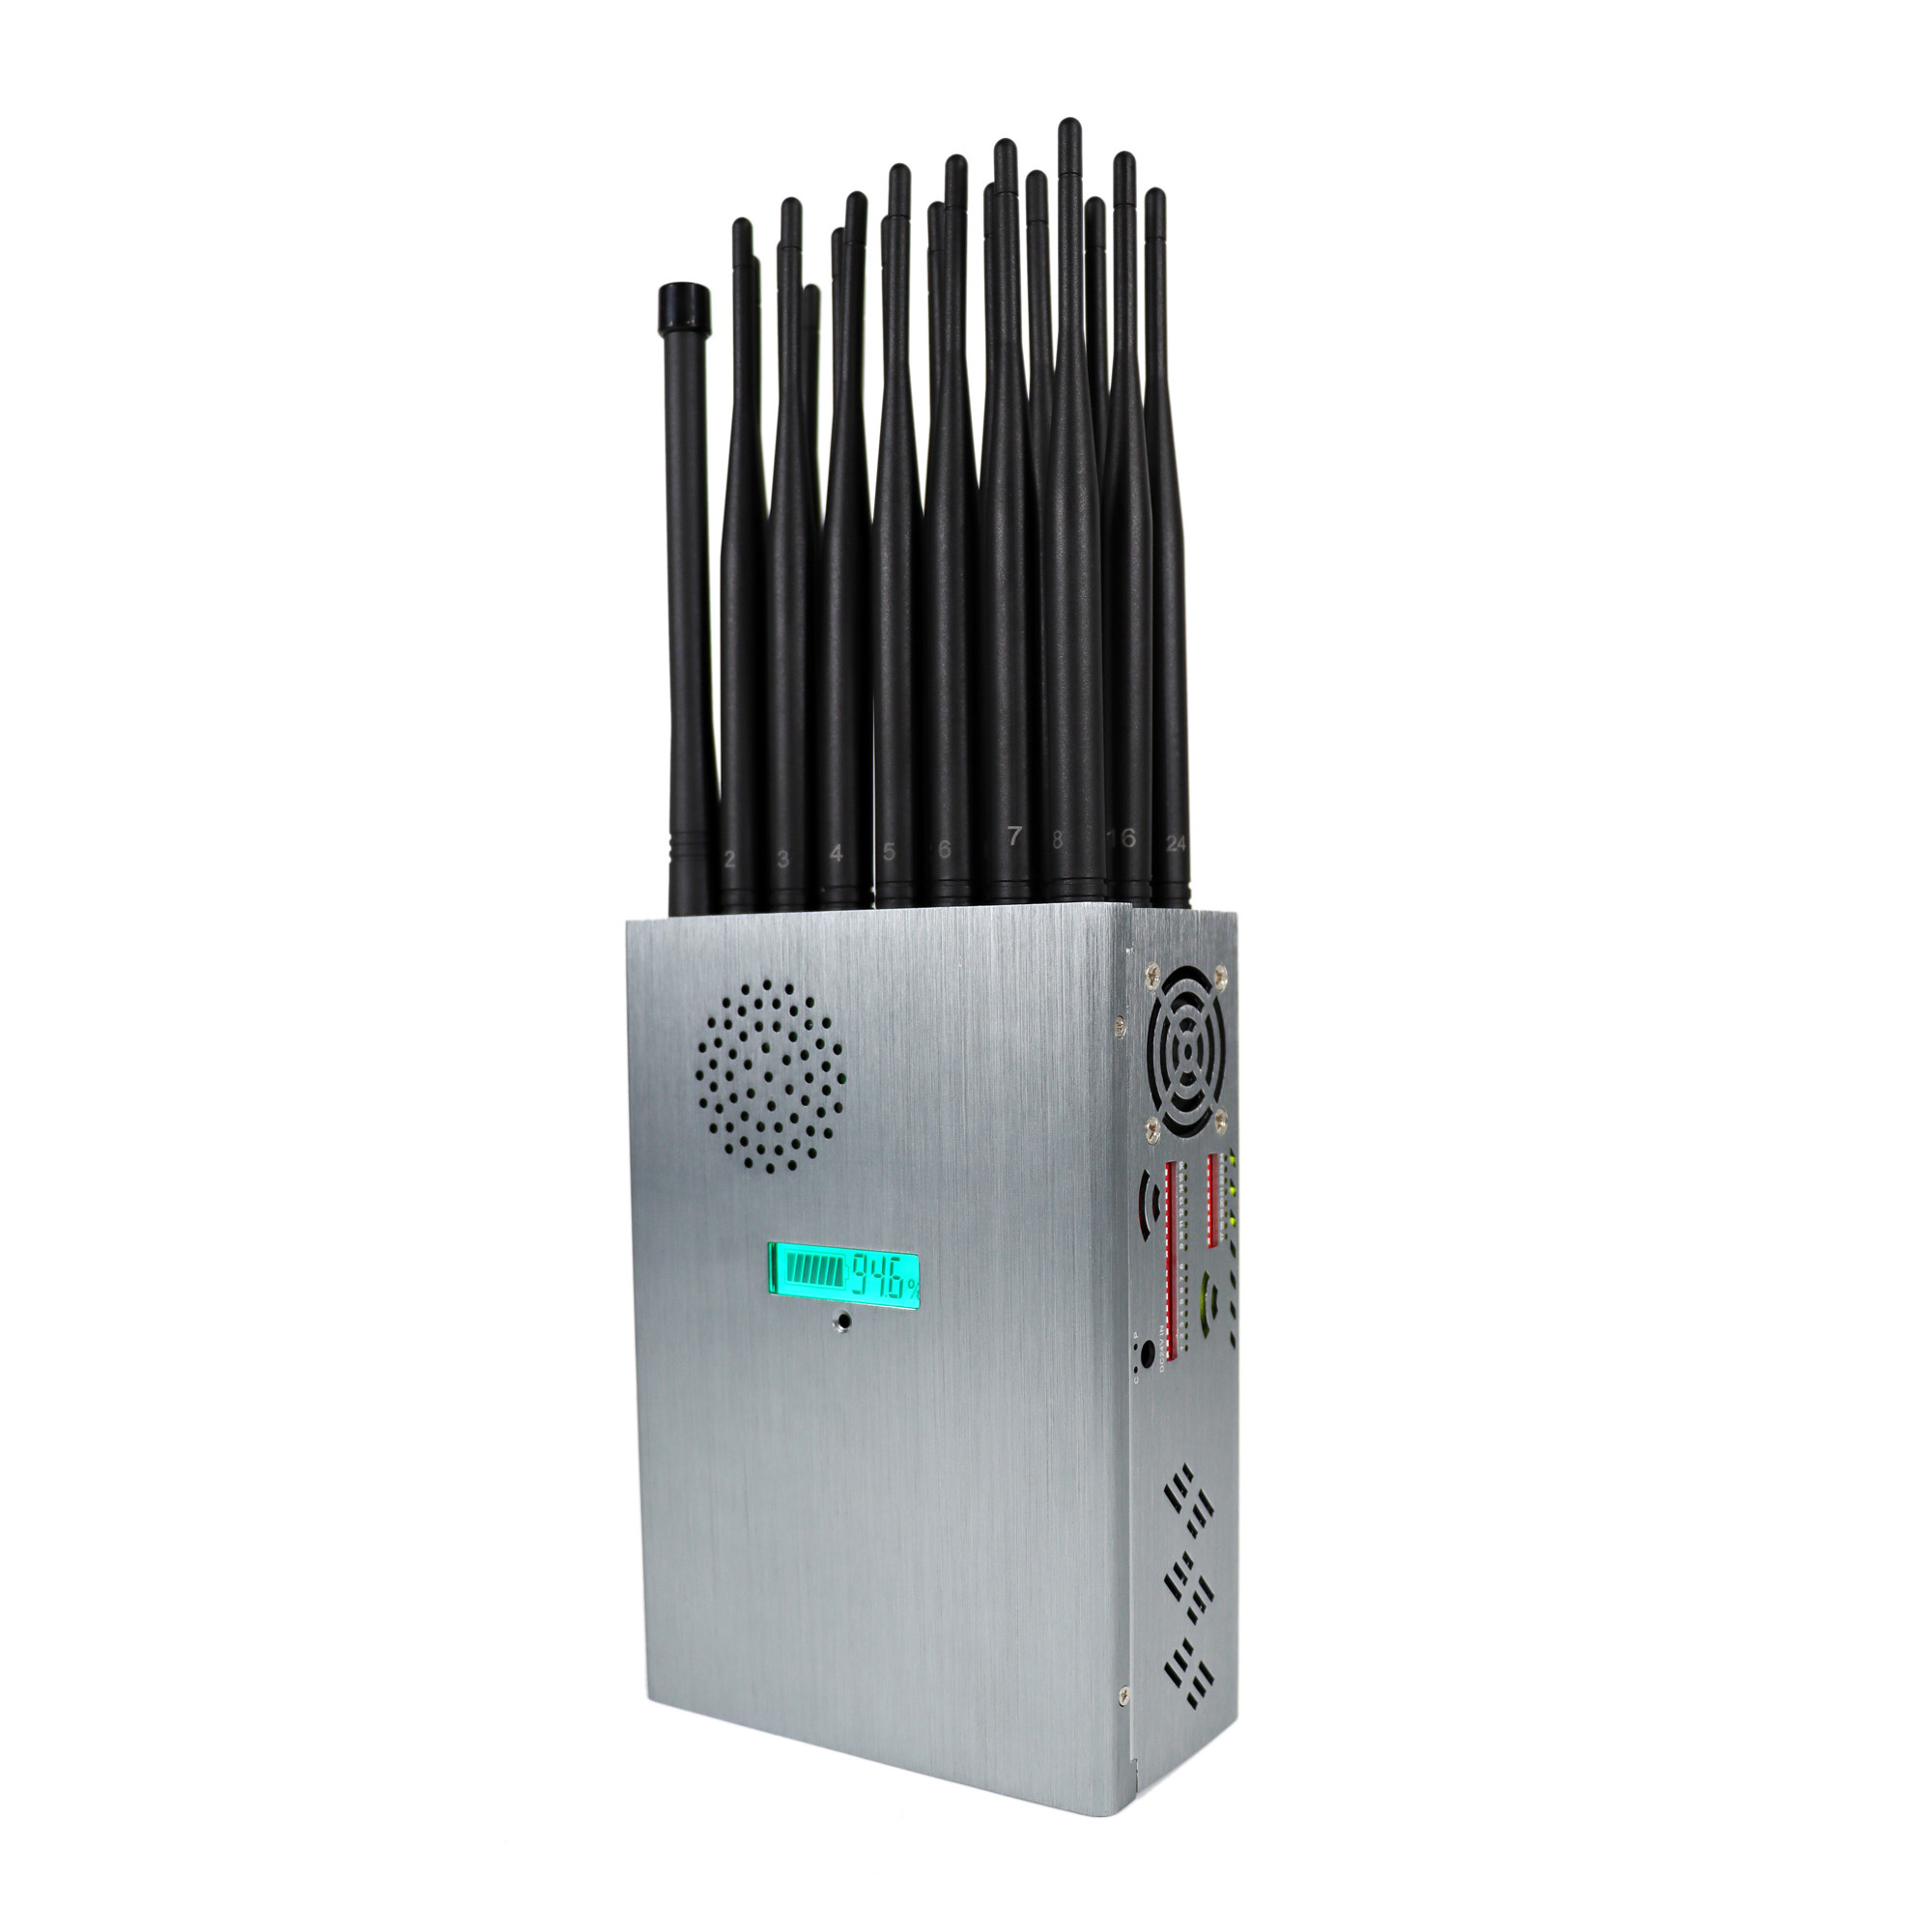 Portable UHF VHF blocker